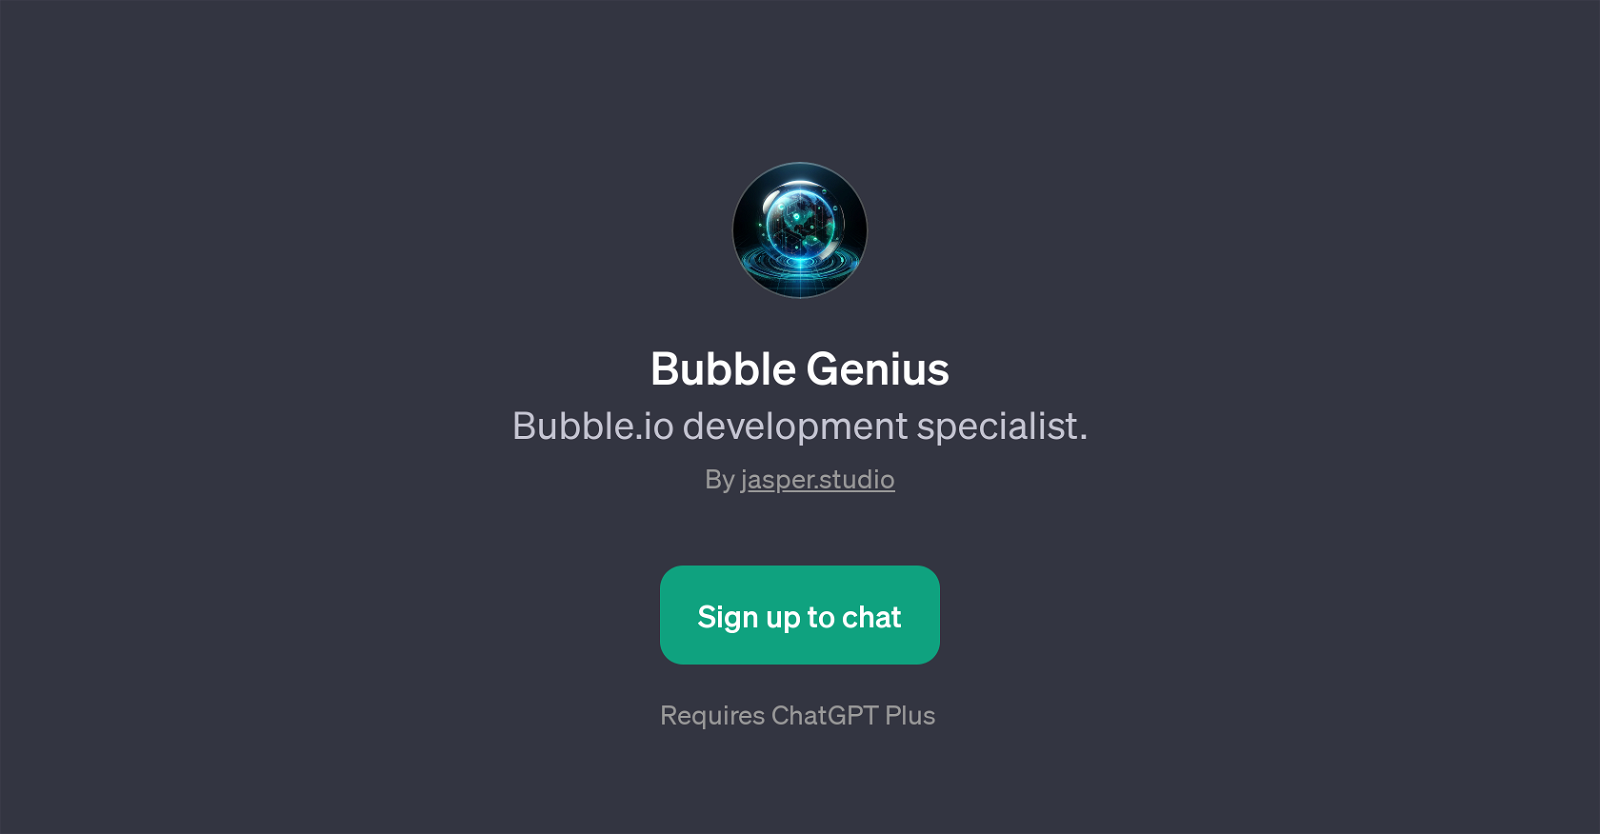 Bubble Genius website